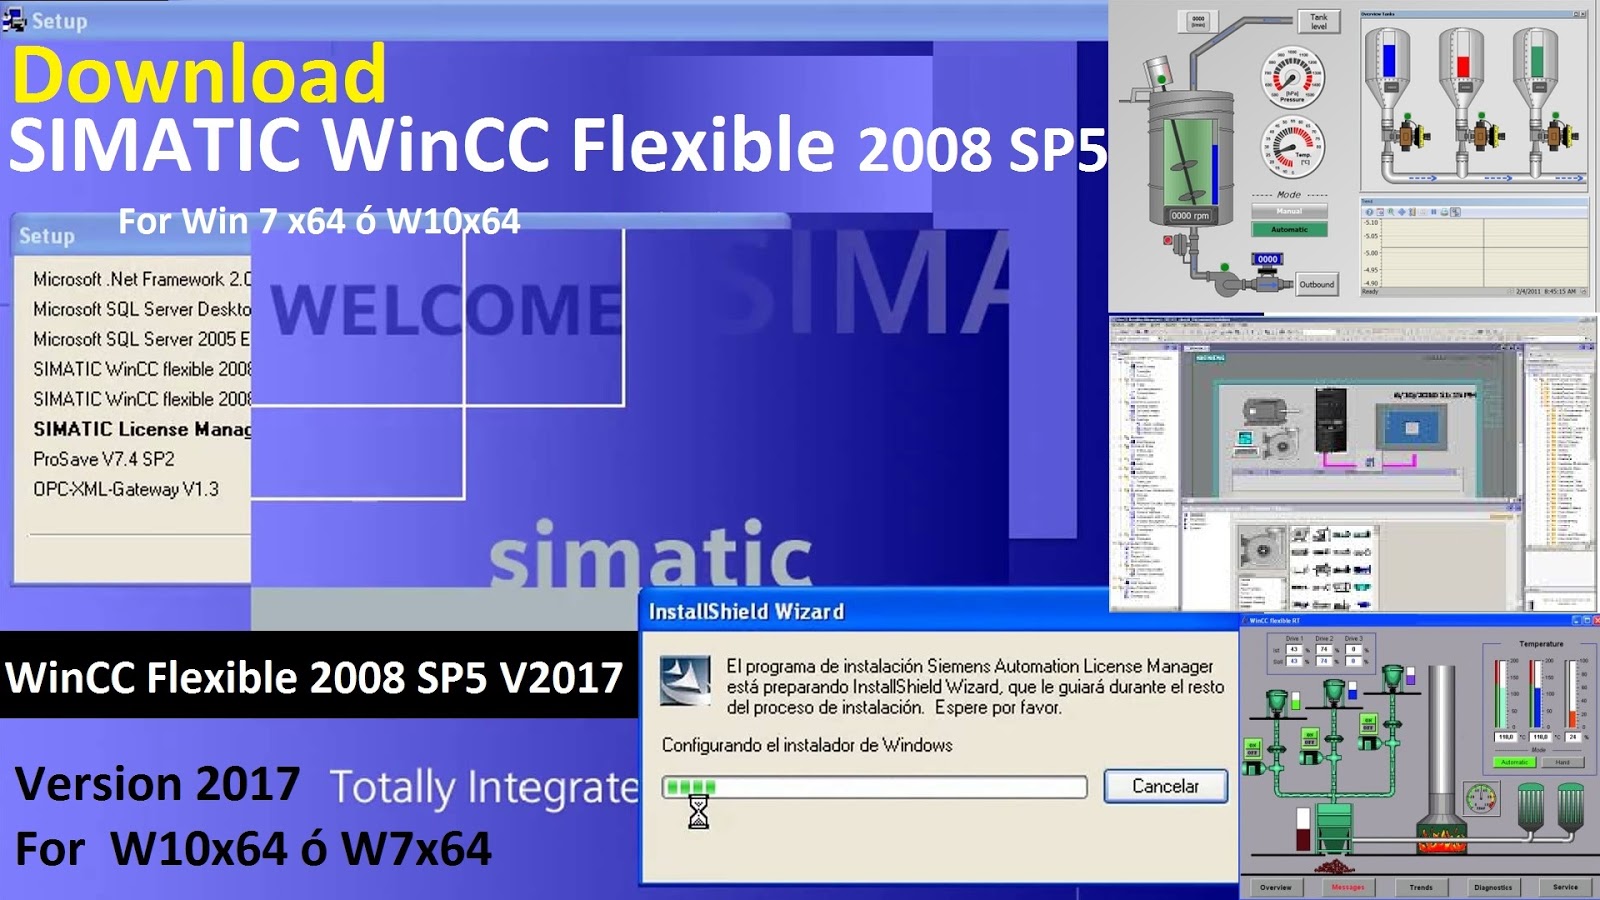 wincc flexible 2008 windows 10 - wincc flexible 2008 sp5